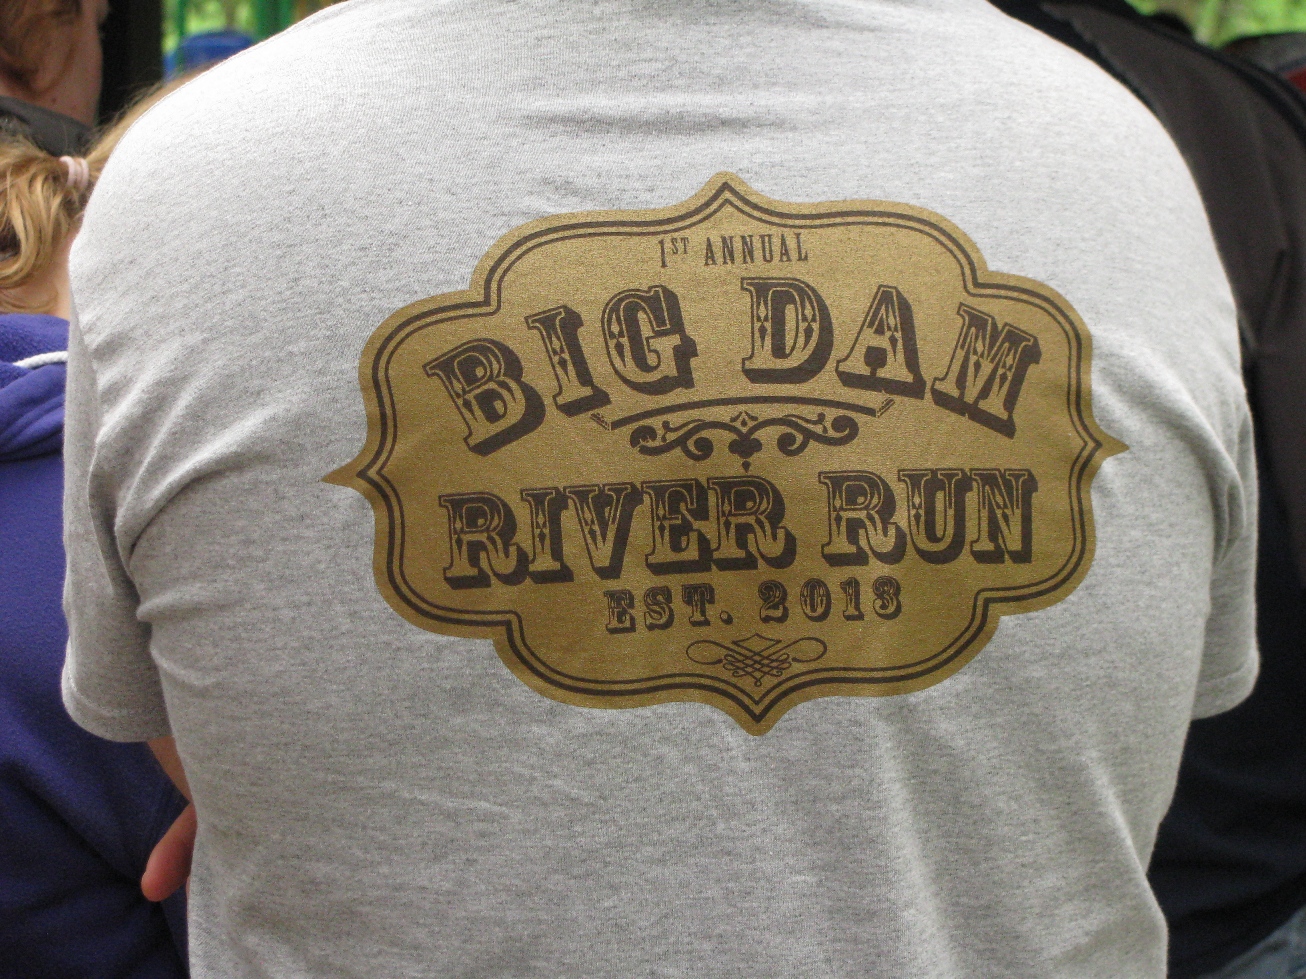 Big Dam River Run Logo